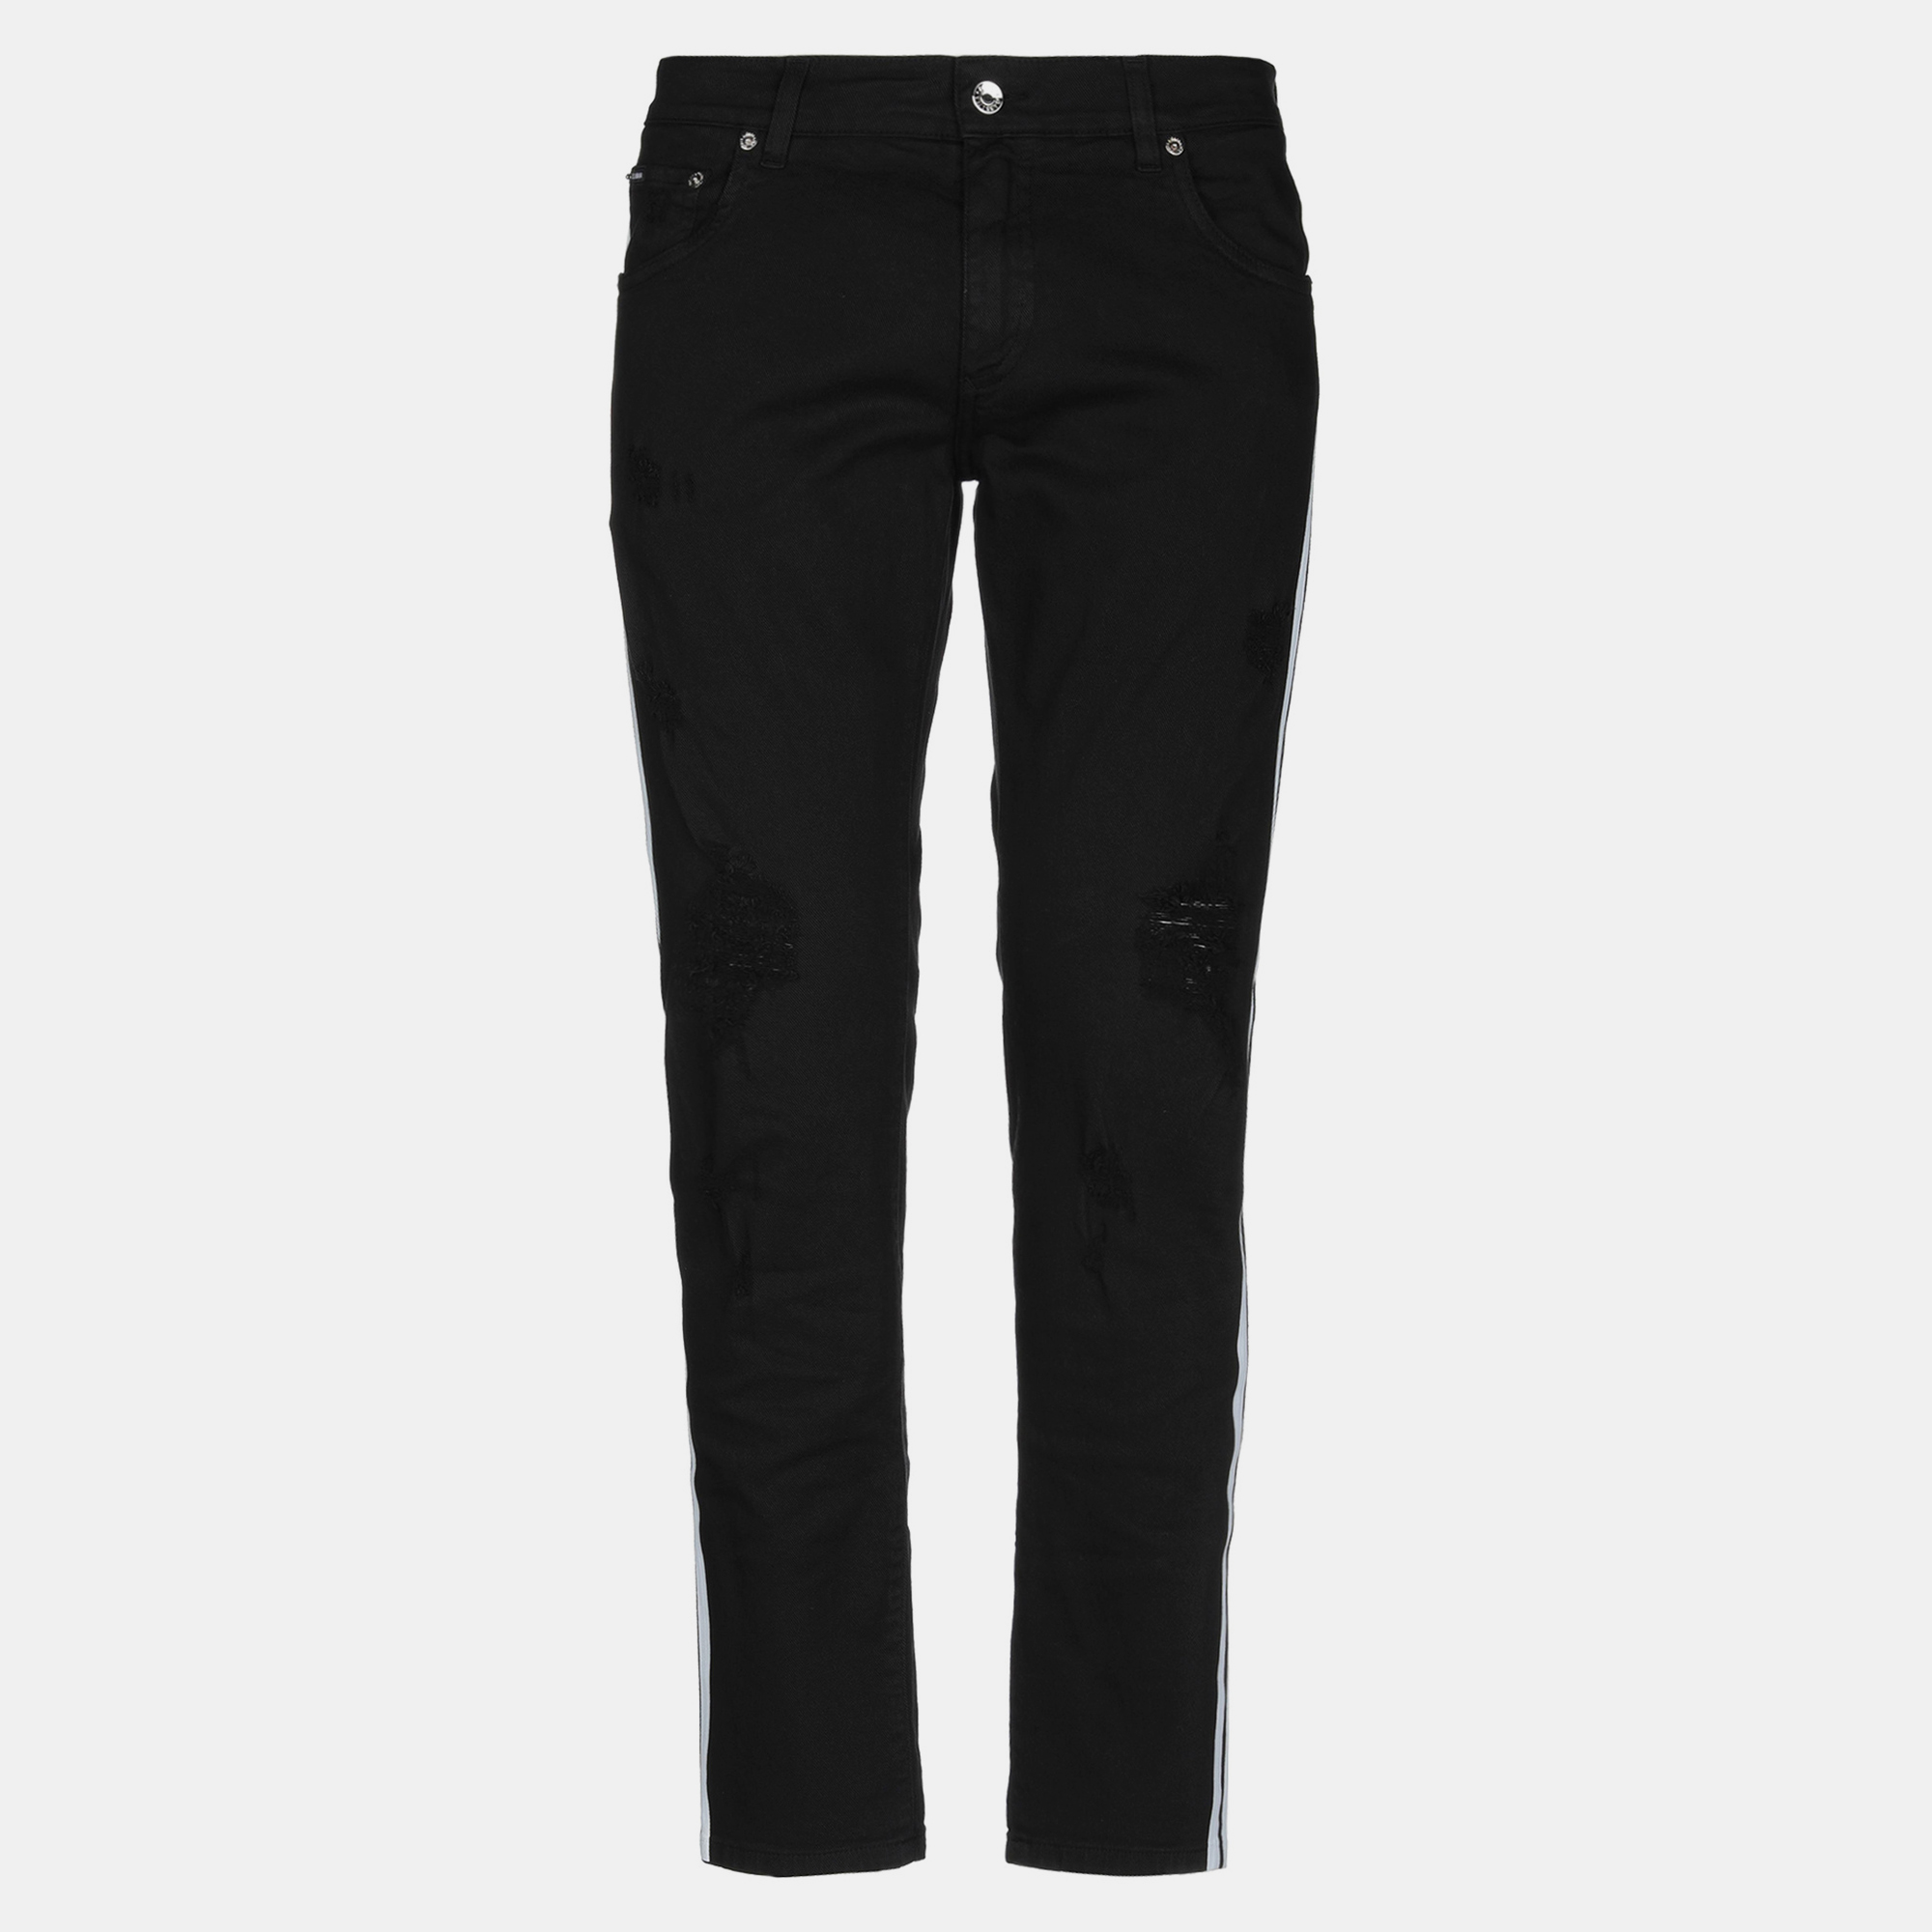 Dolce & gabbana cotton jeans 44